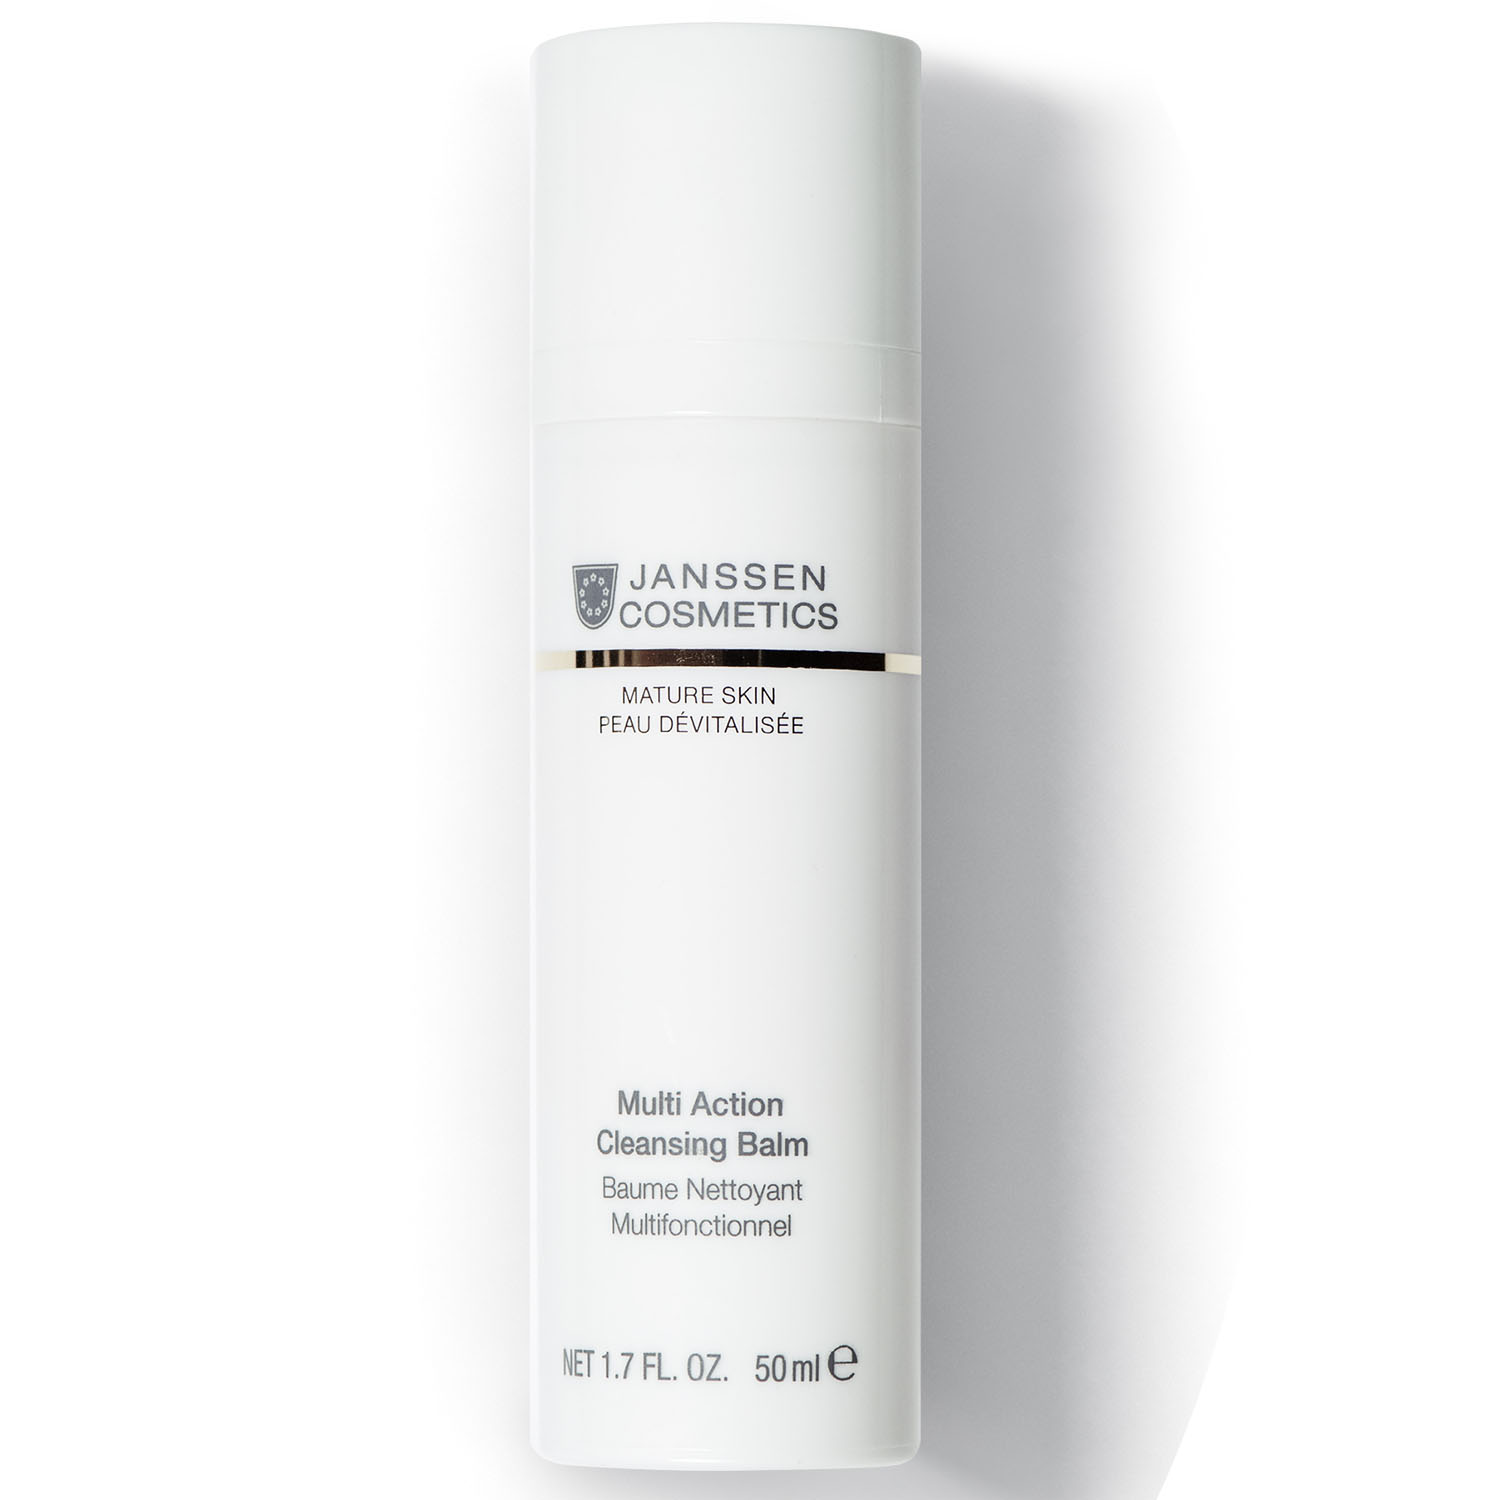 Janssen Cosmetics Мультифункциональный бальзам Multi action Cleansing Balm, 50 мл (Janssen Cosmetics, Mature Skin)